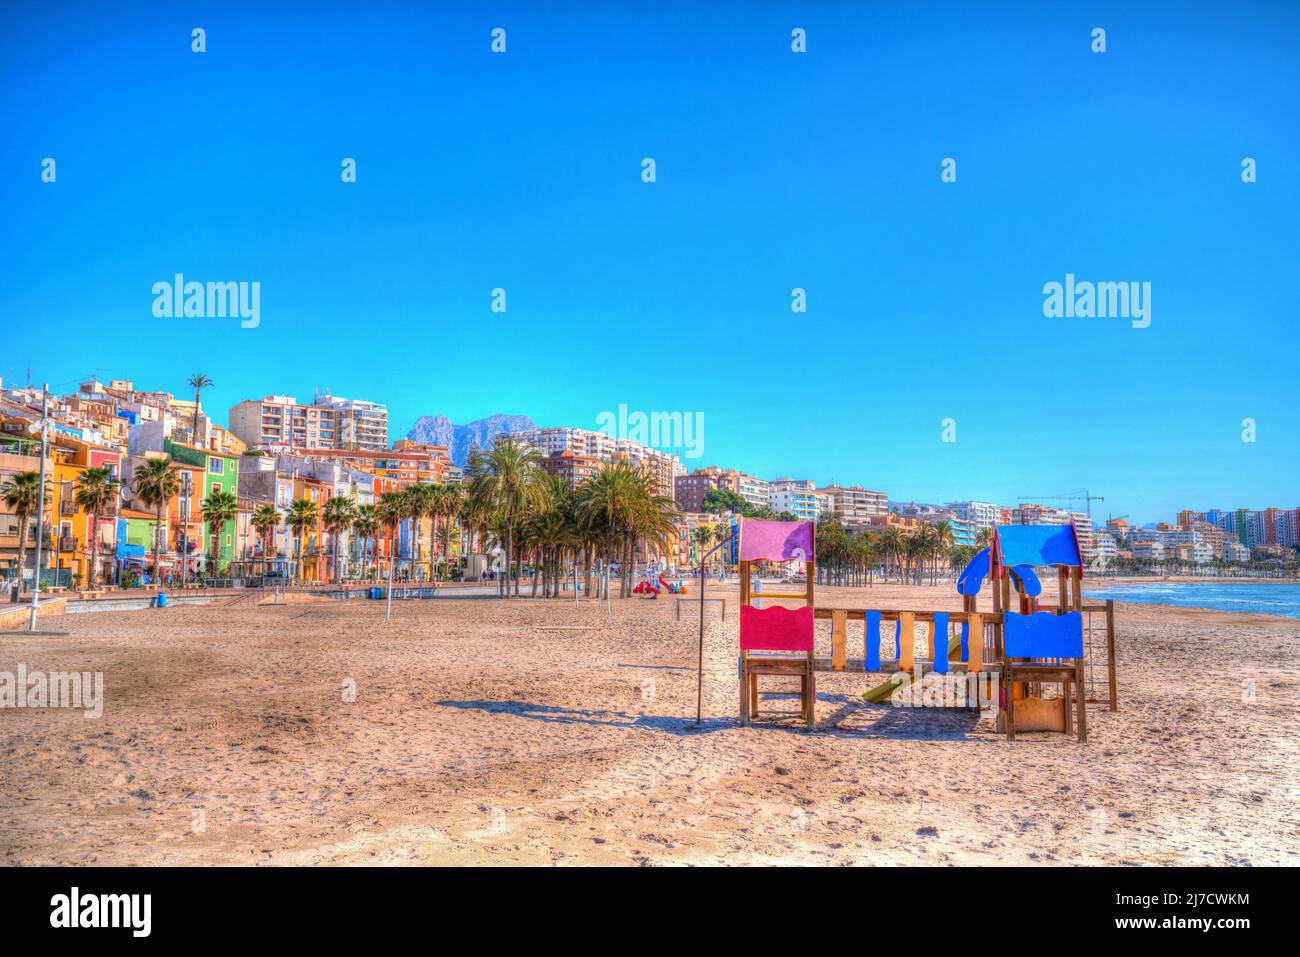 Villajoyosa Spain colourful beach scene with play area Costa Blanca Alicante hdr Stock Photo